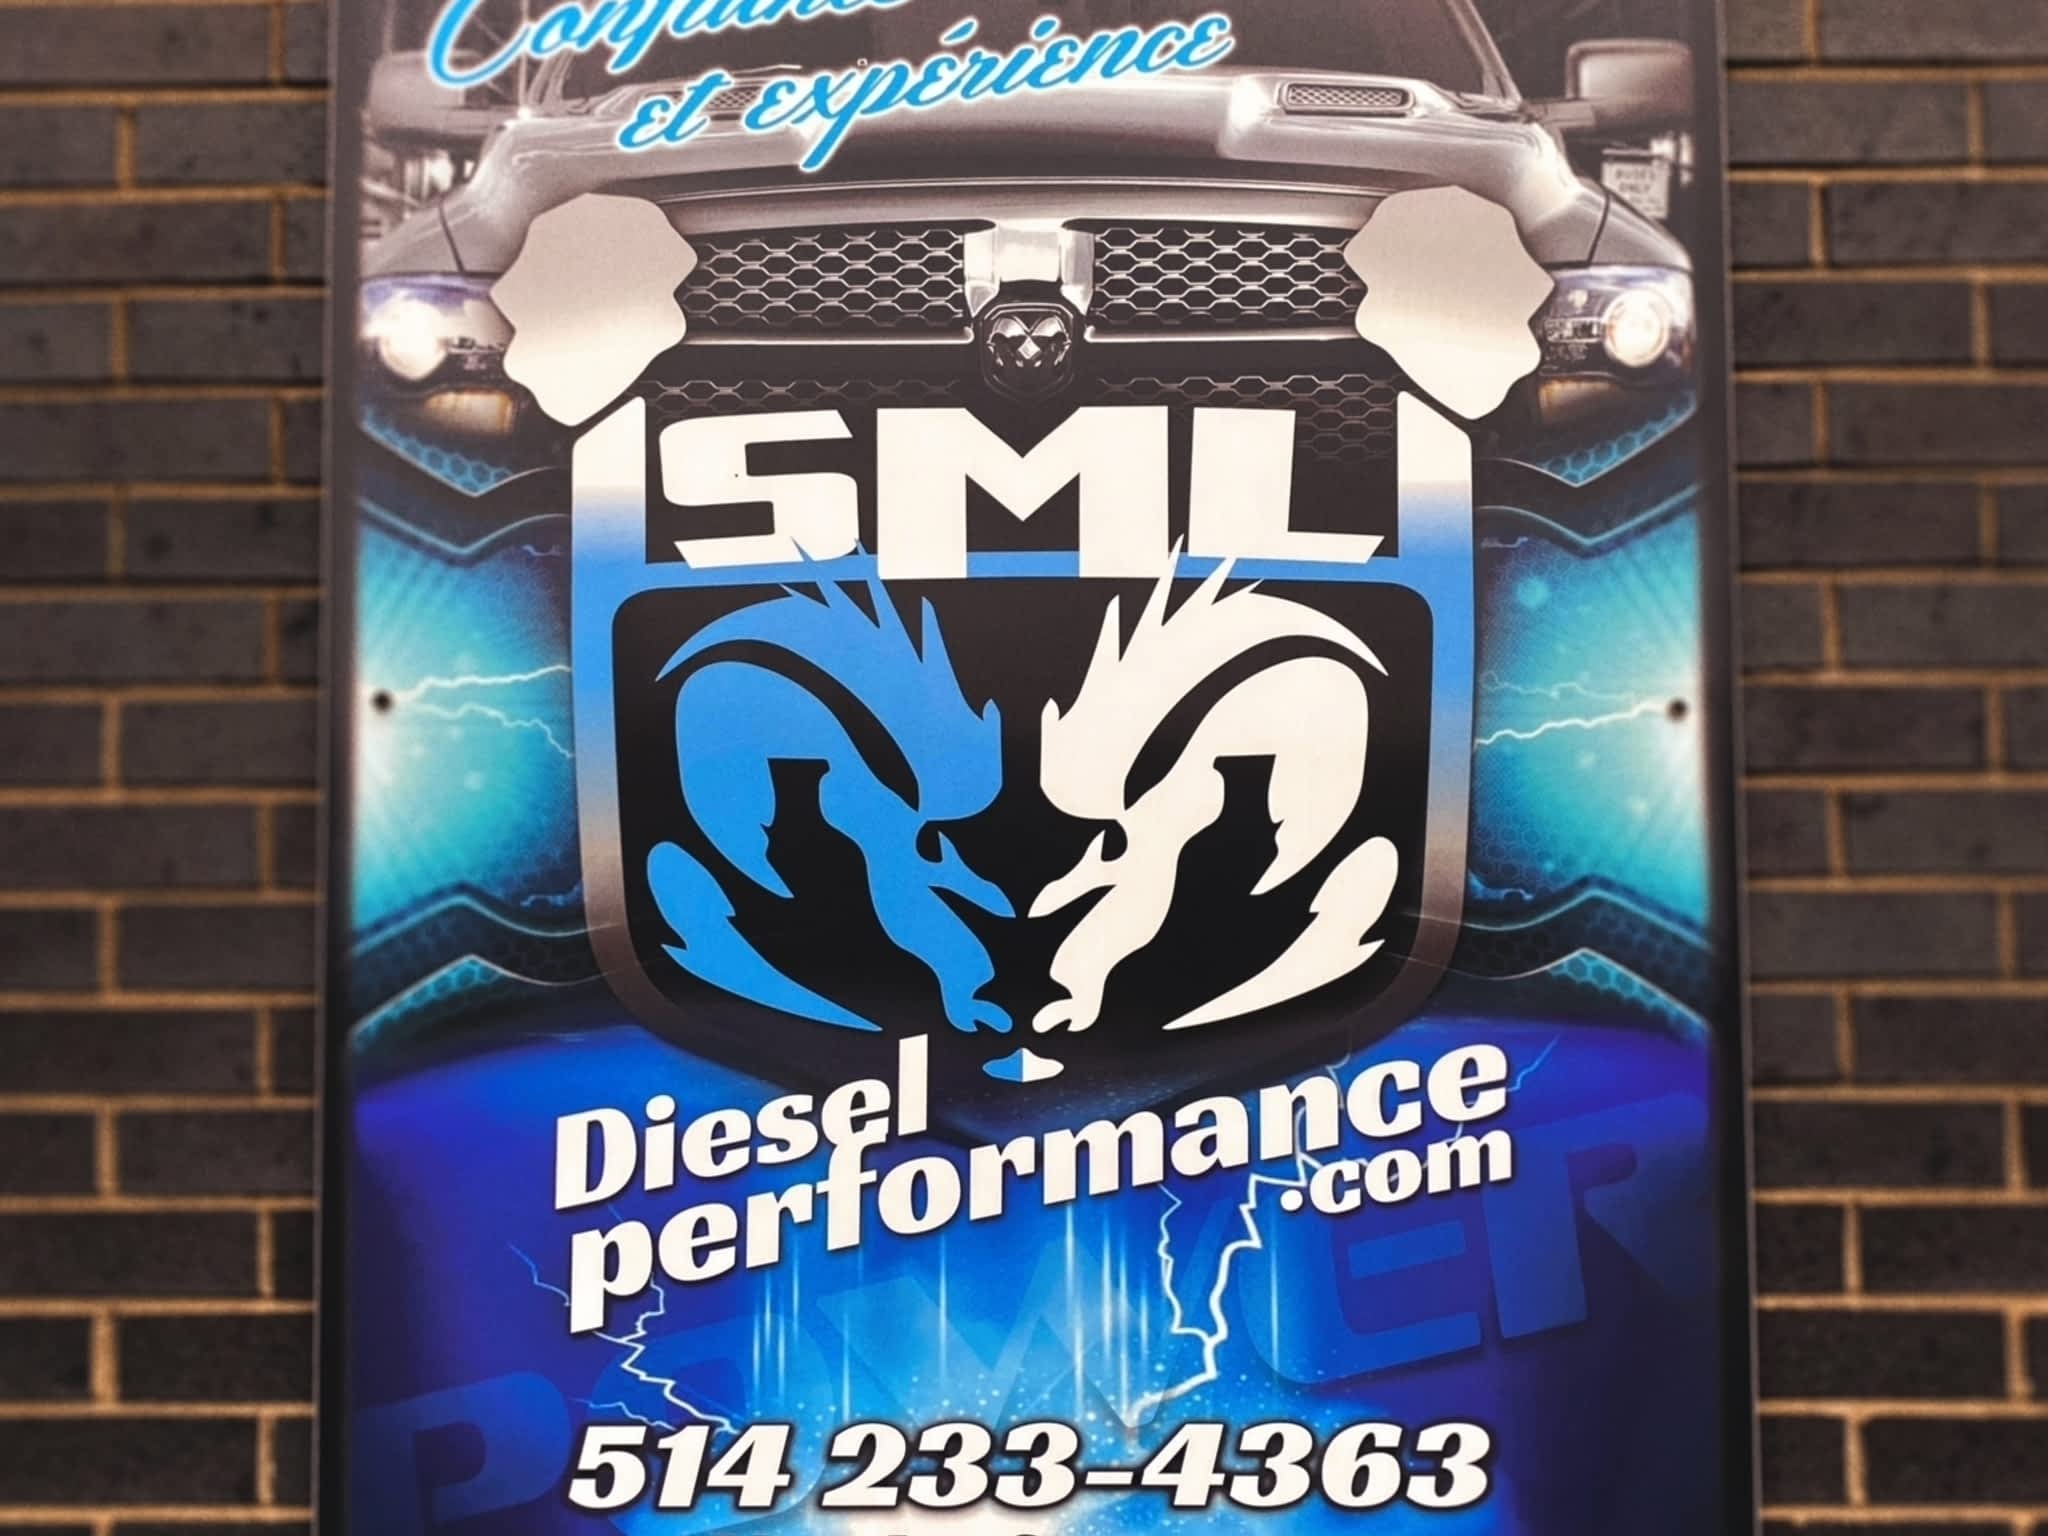 photo SML Diesel Performance